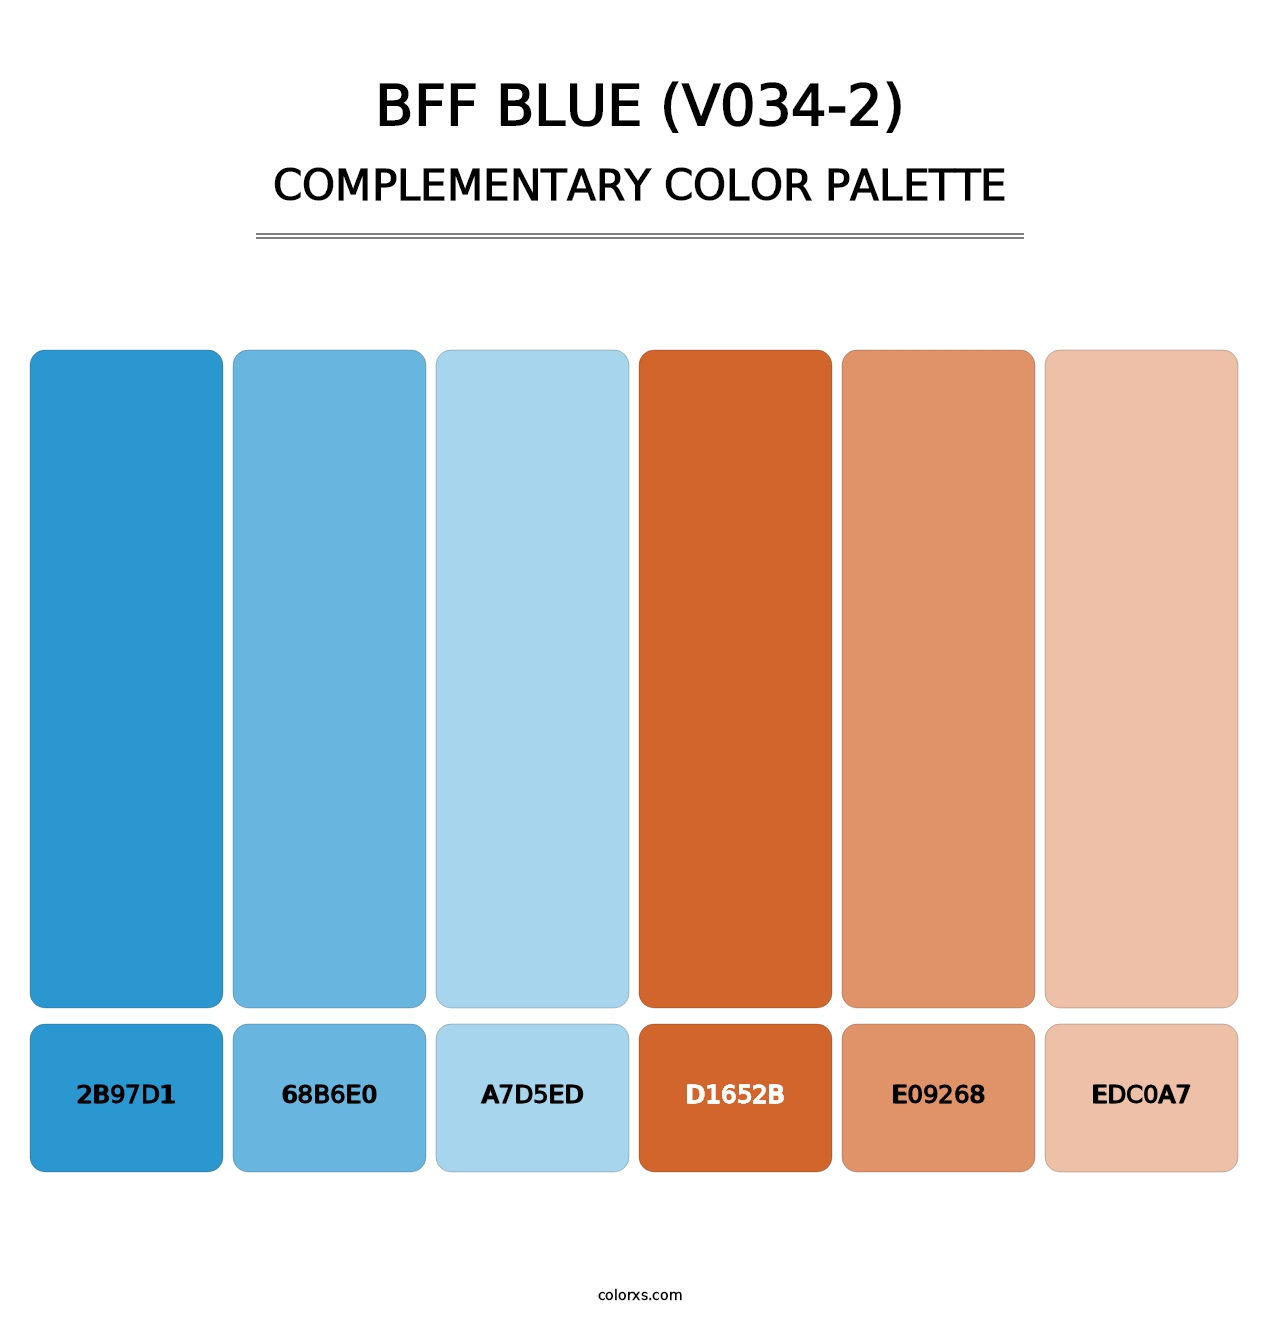 BFF Blue (V034-2) - Complementary Color Palette